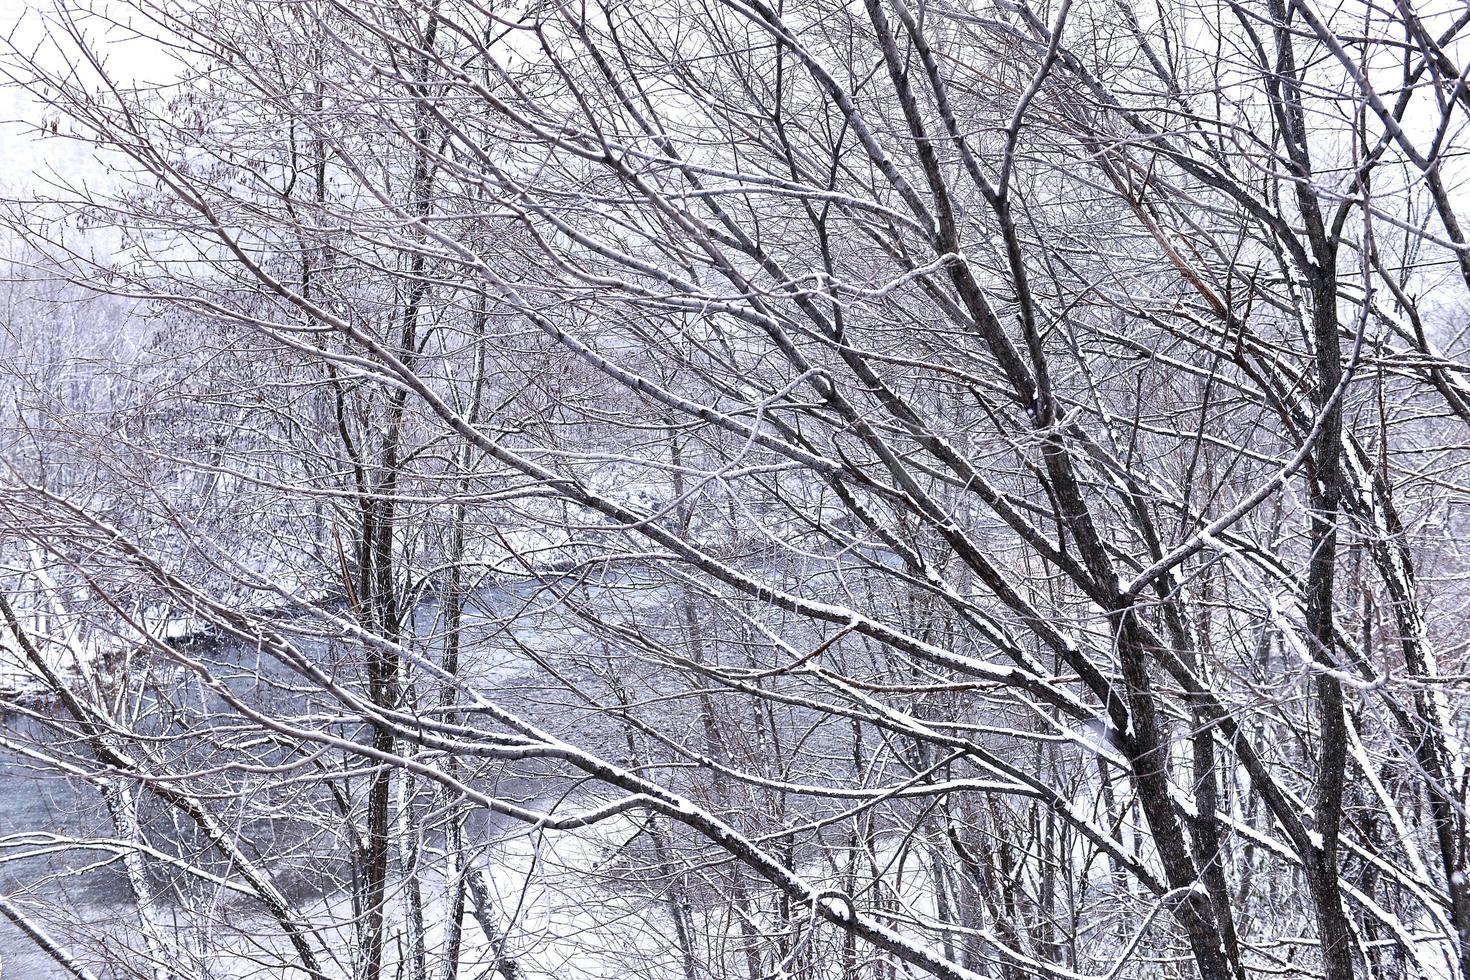 boom gedekt met sneeuw in winter foto